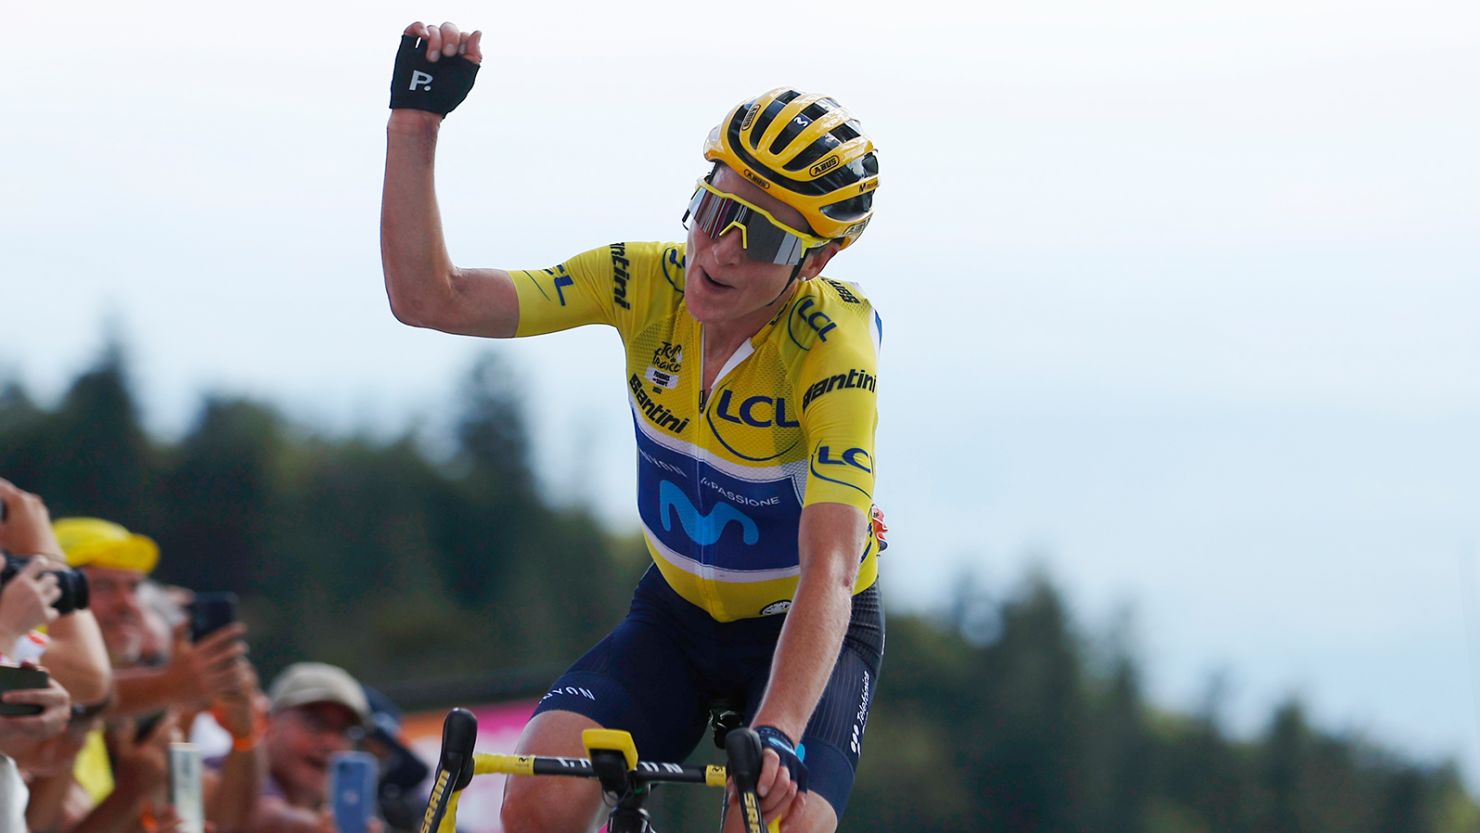 Netherland's Annemiek van Vleuten wins the Tour de France Femmes cycling race, Sunday, July 31, 2022.